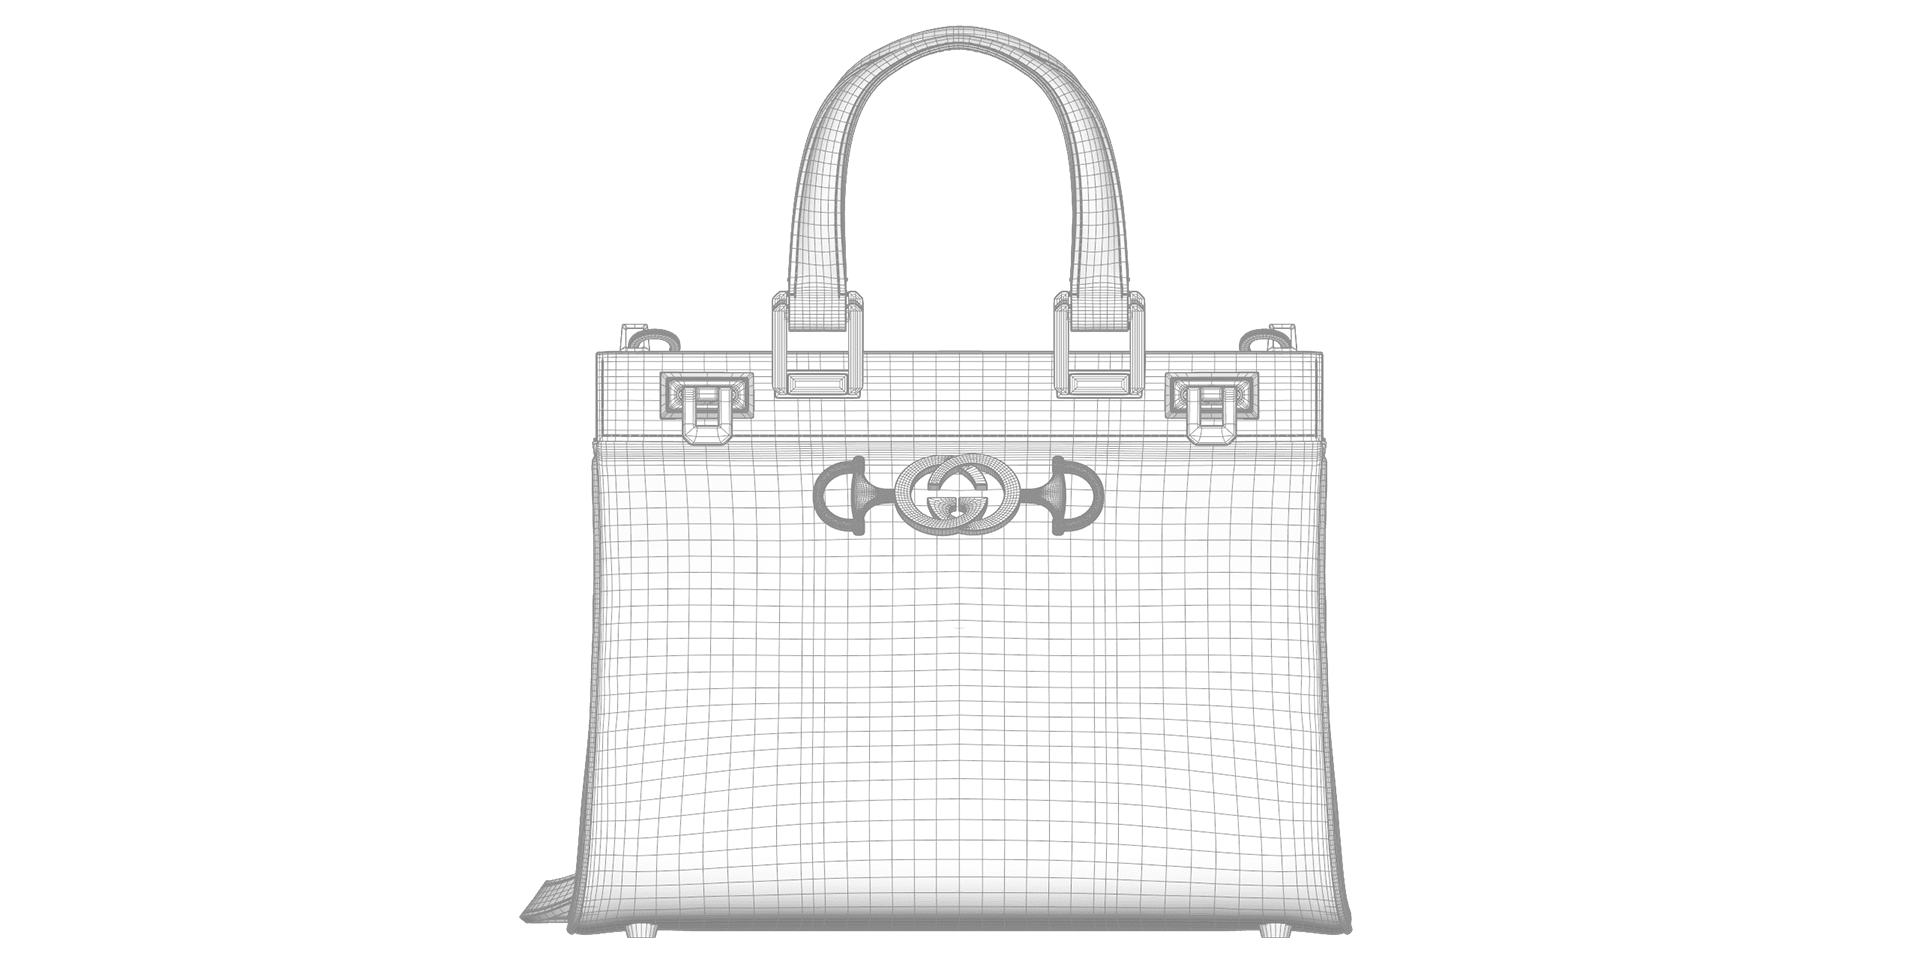 3D Scan of a Gucci Bag